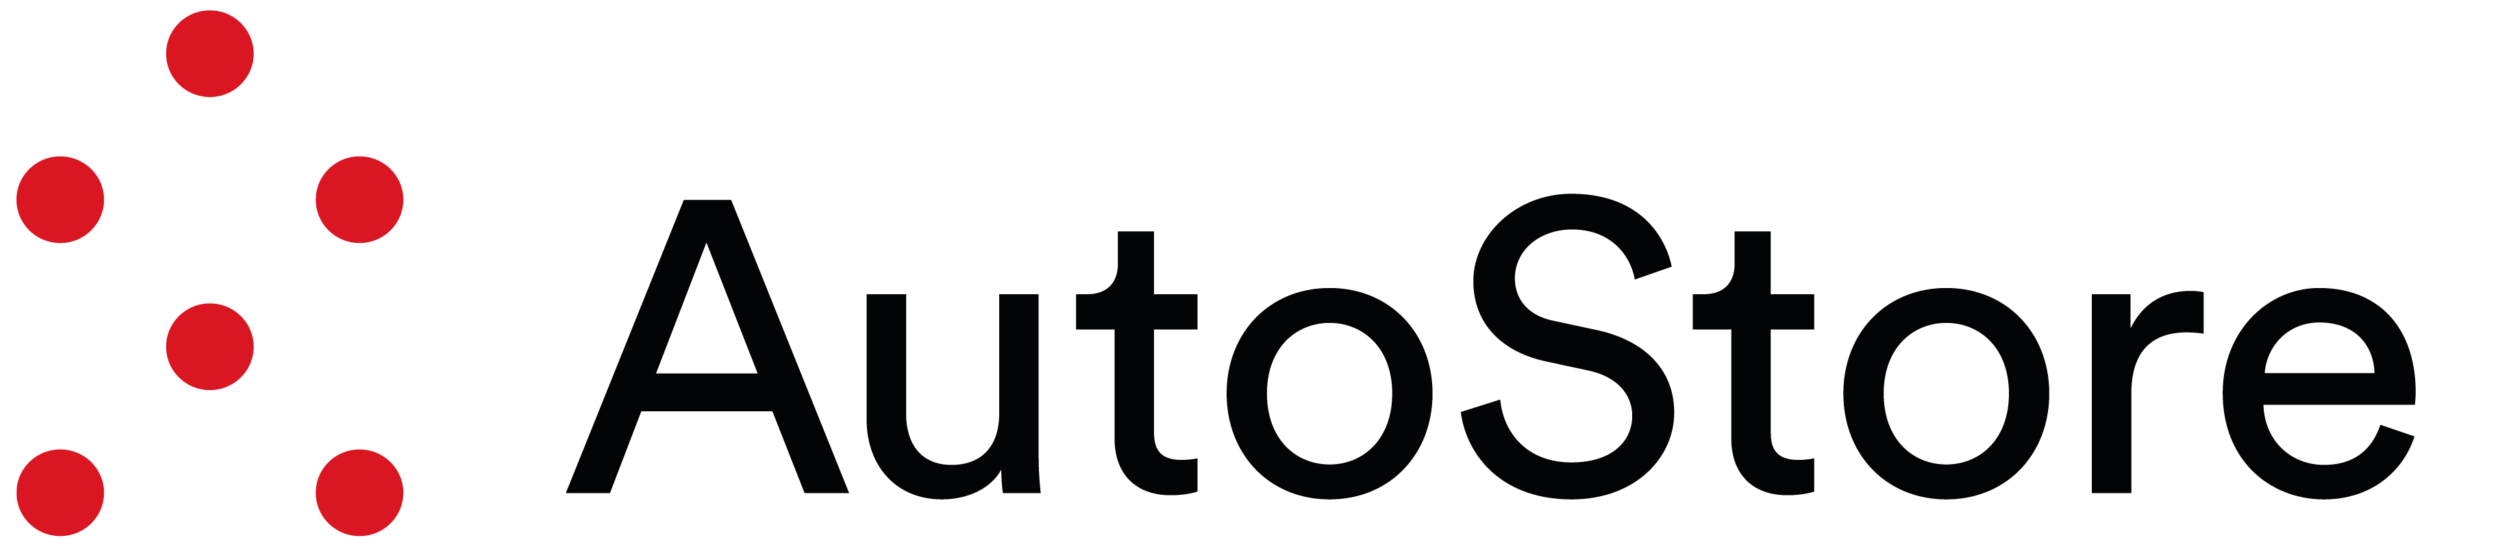 AutoStore System